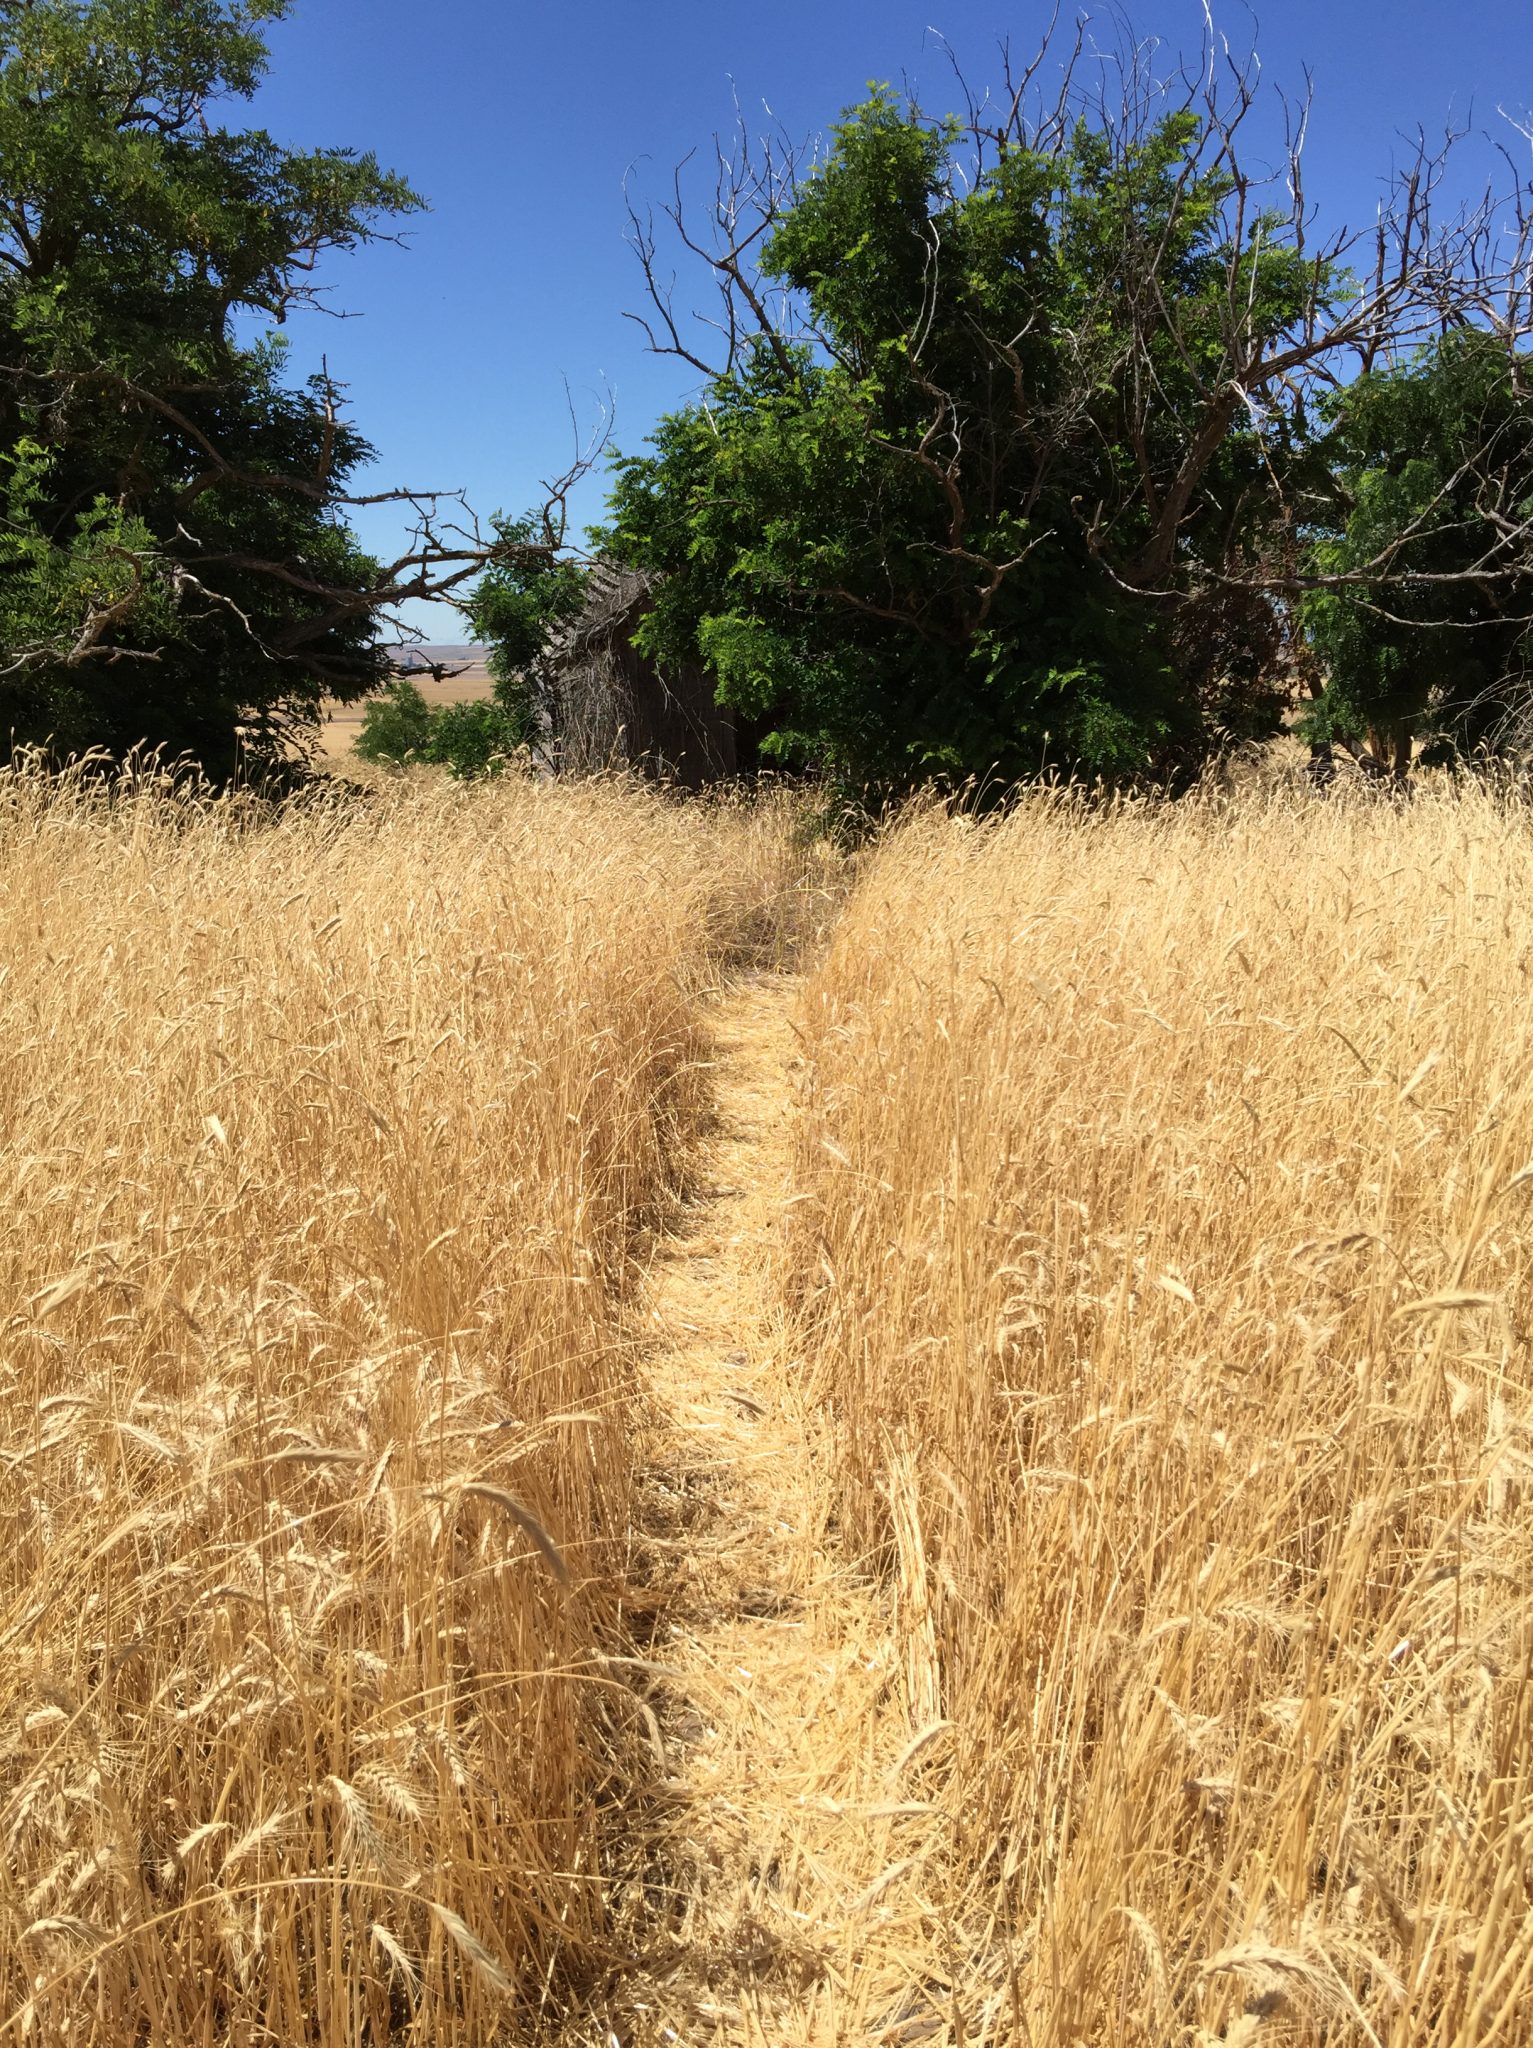 Walking Path Through A Golden Wheat Field